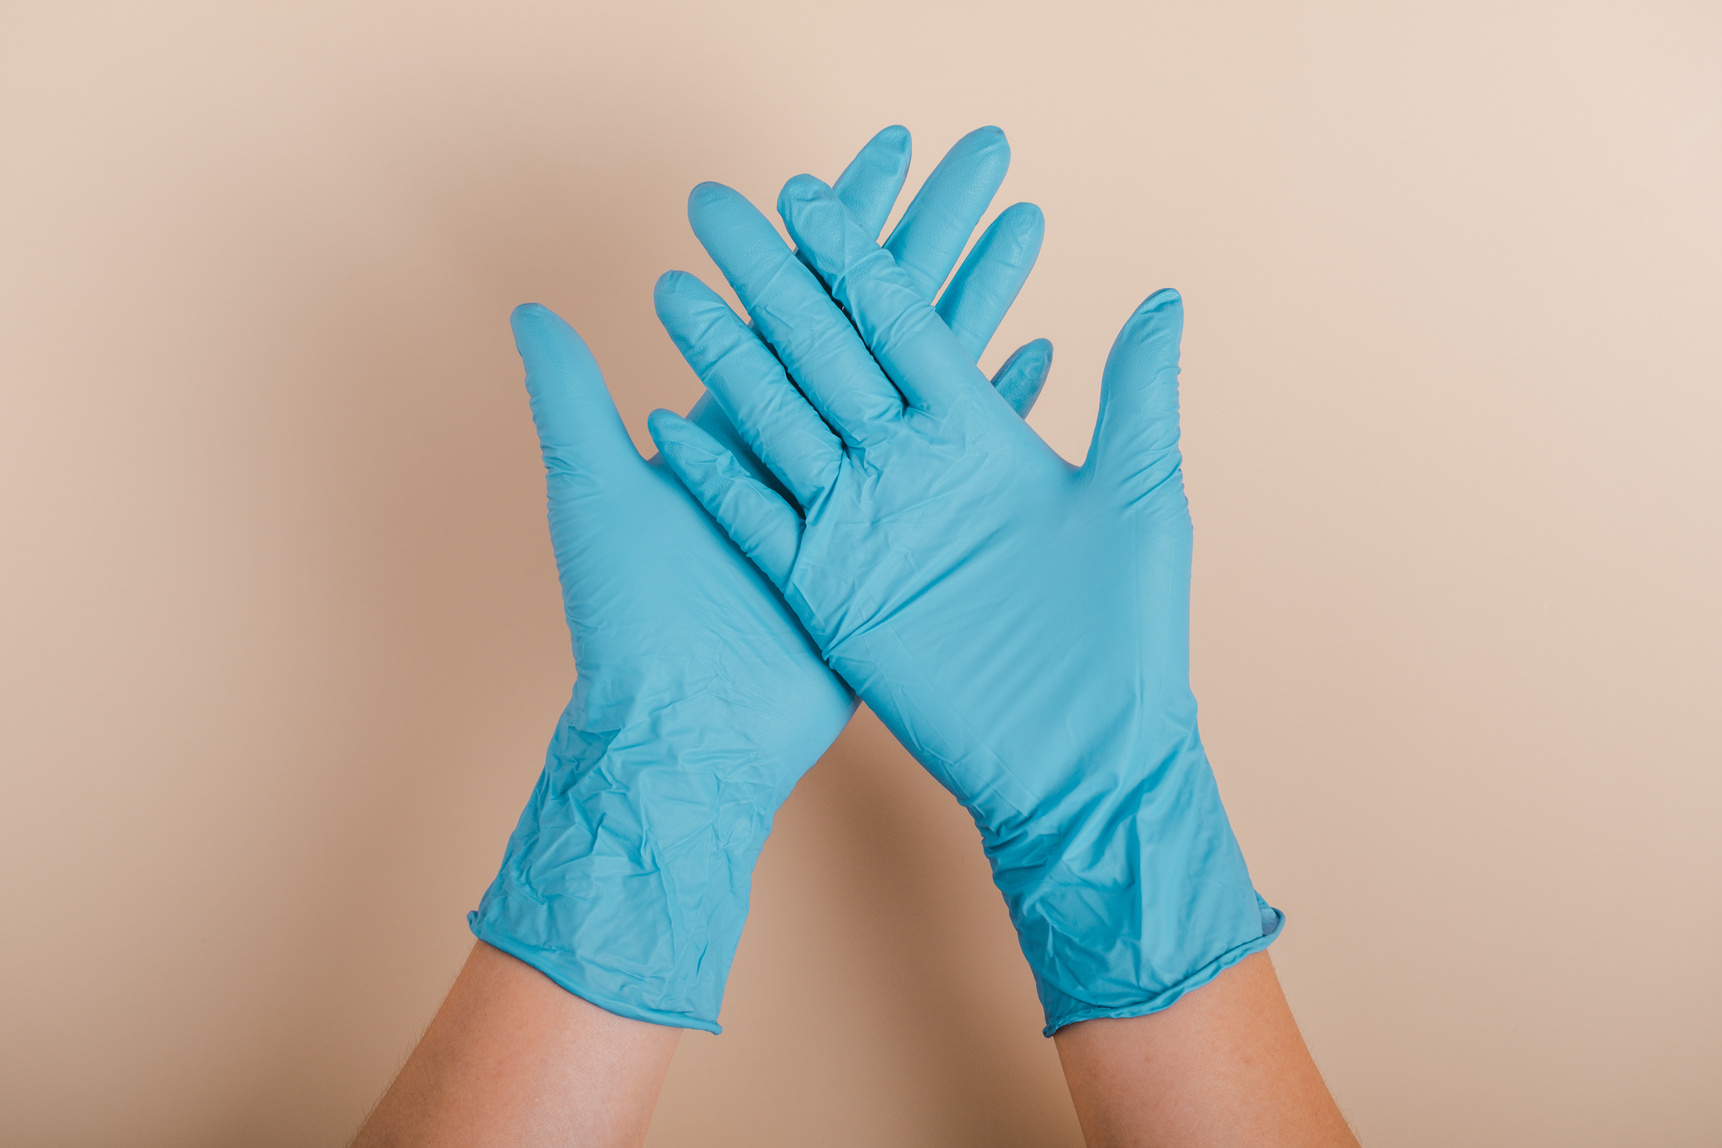 Medical nitrile gloves.Two blue surgical gloves